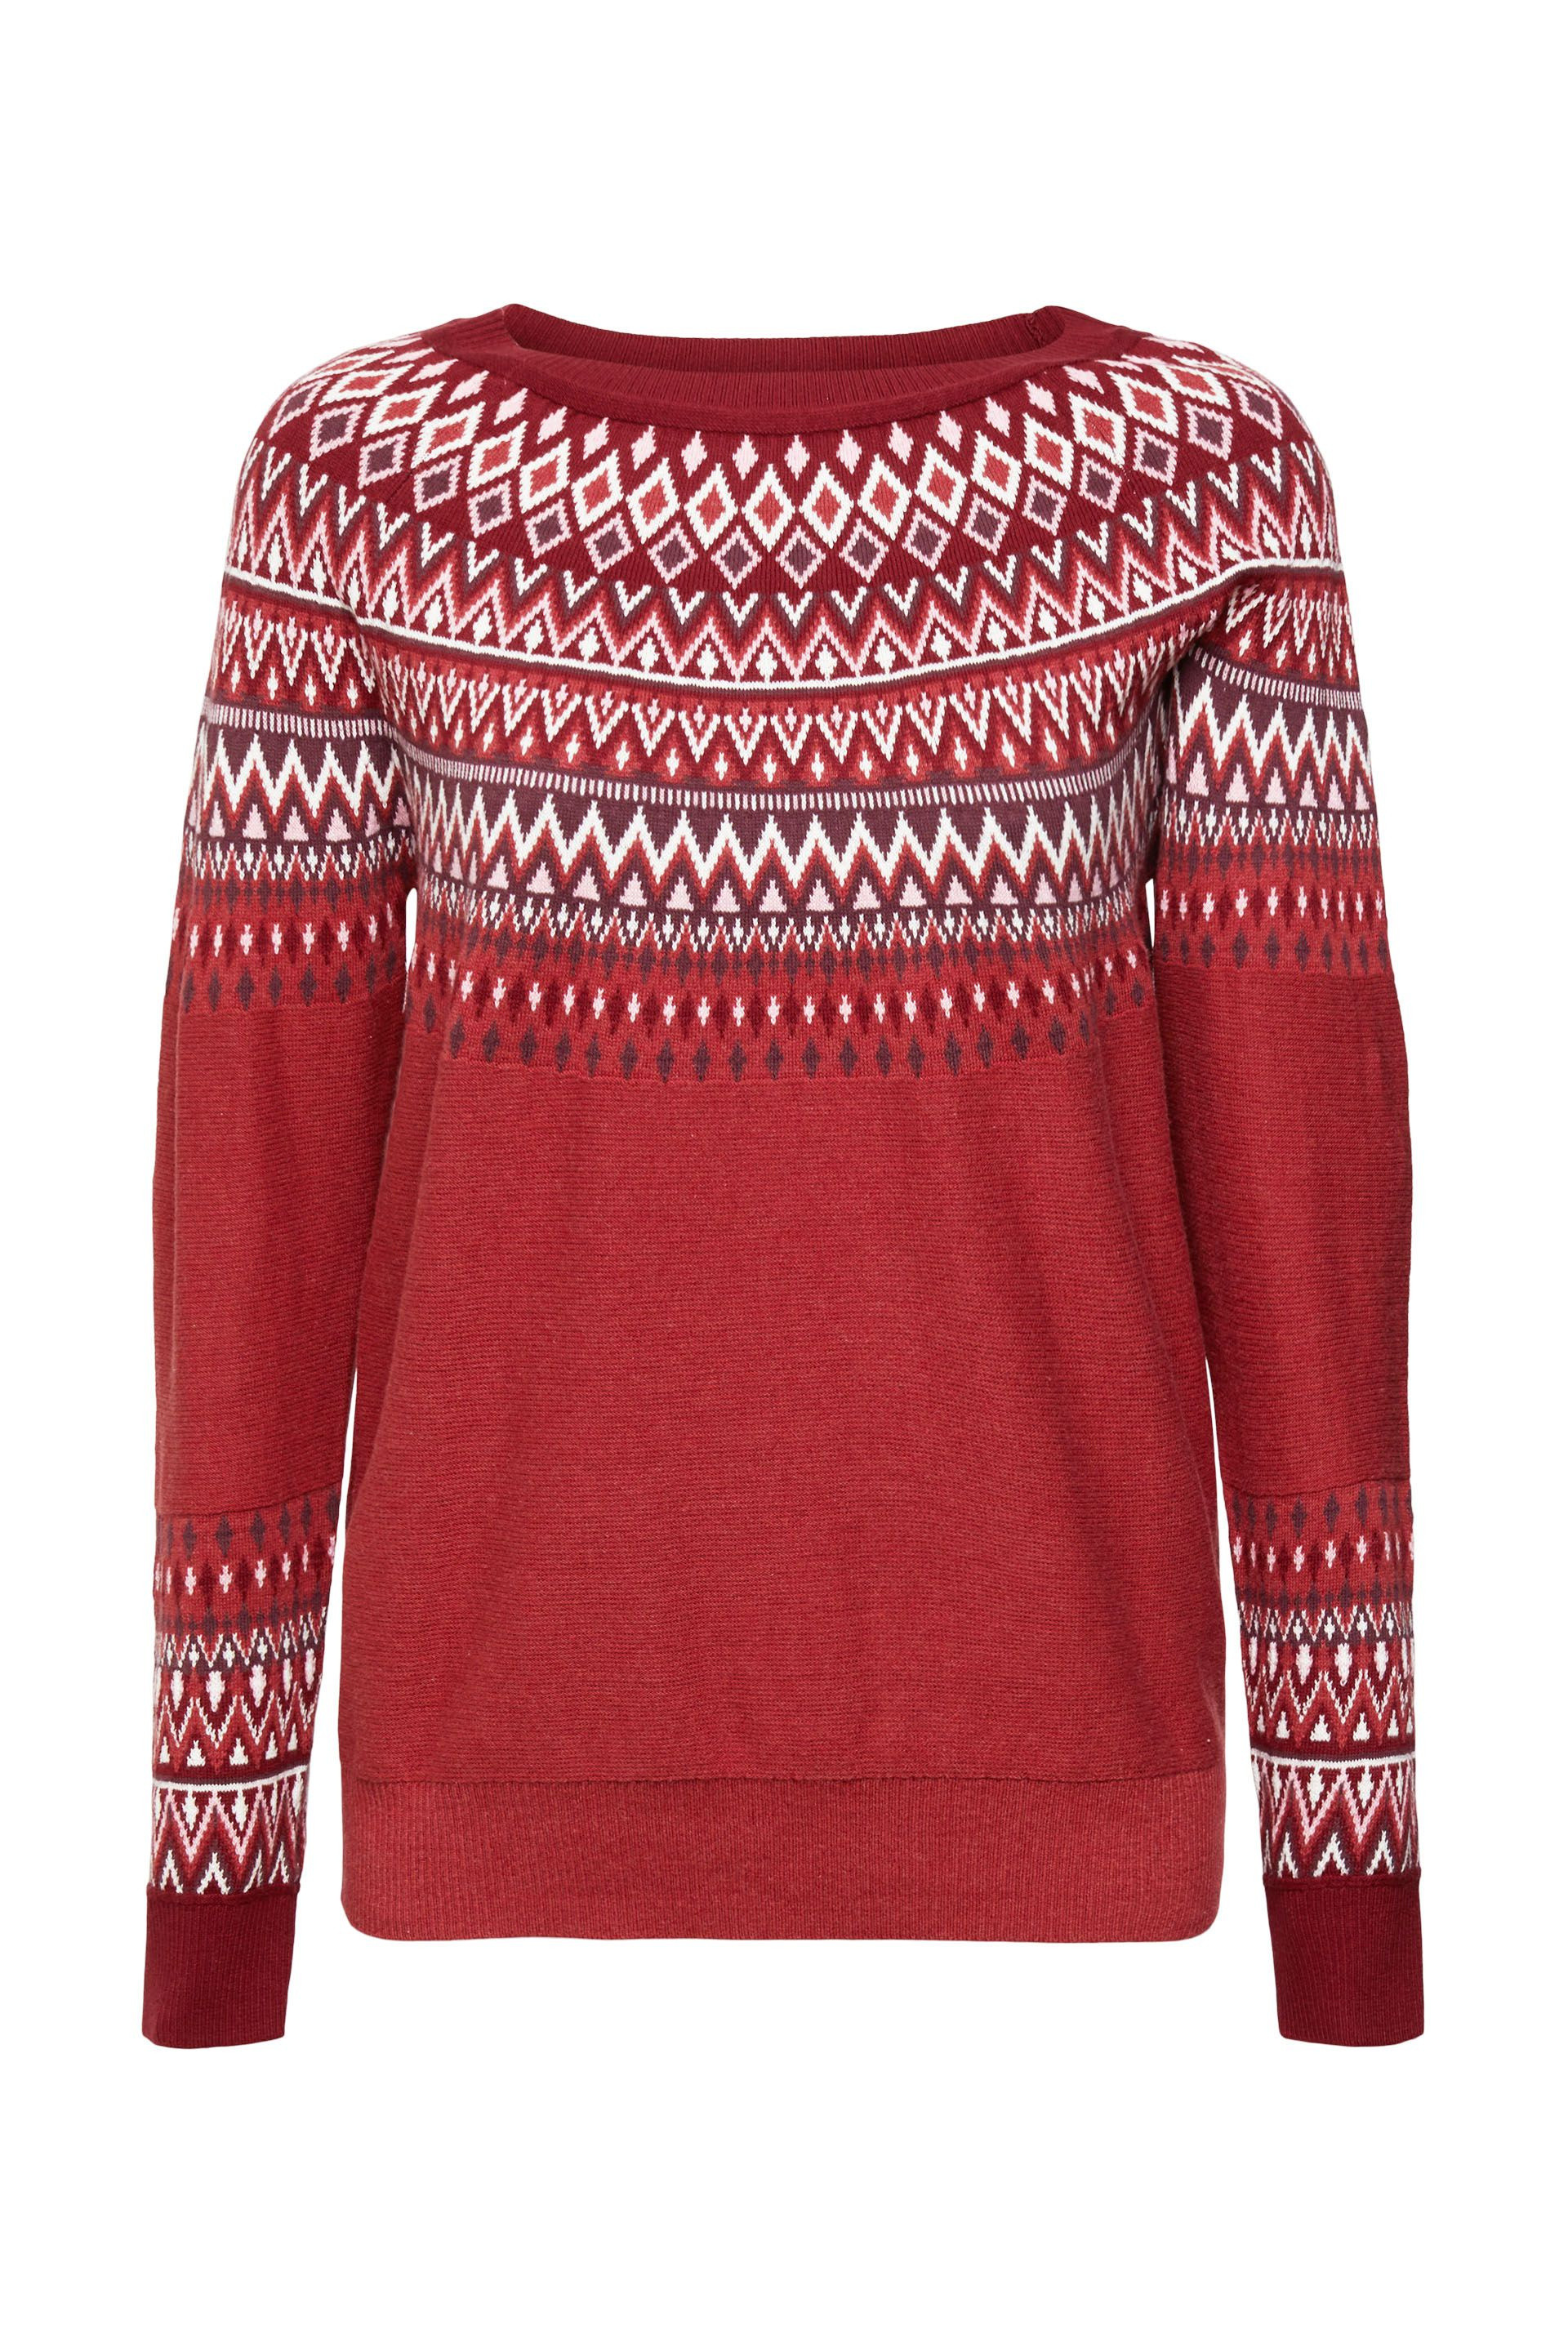 Jacquard crewneck sweater, Brick Red, large image number 0